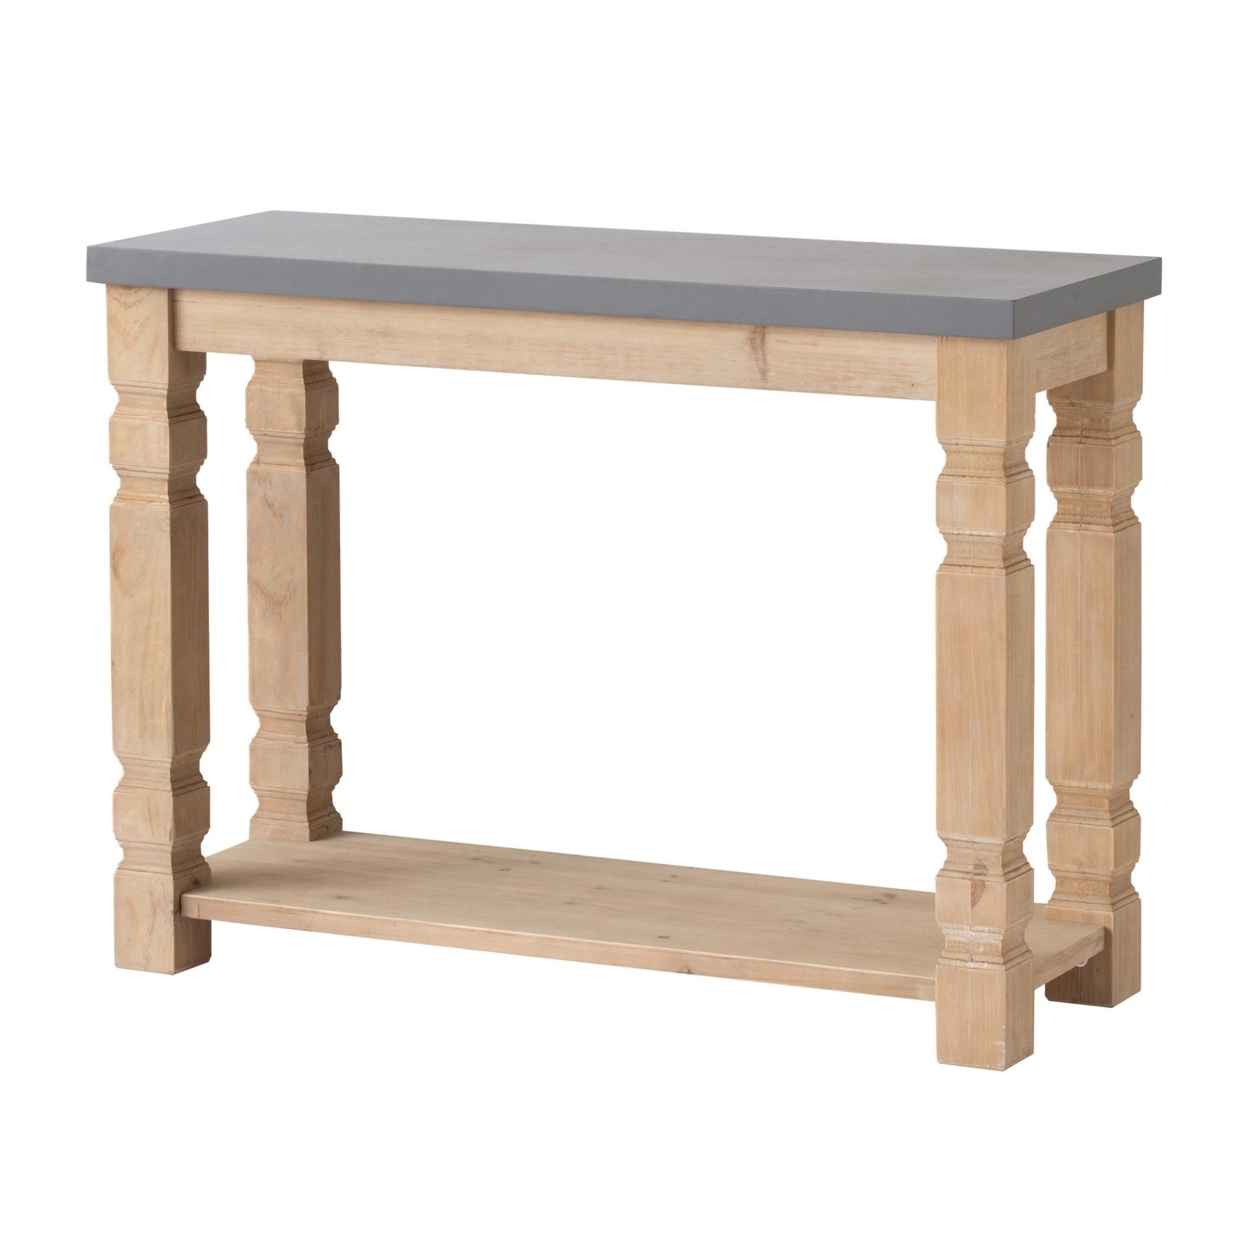 42 Inch Console Sideboard Table, Wood Frame, Concrete Top, Modern, Gray, Saltoro Sherpi